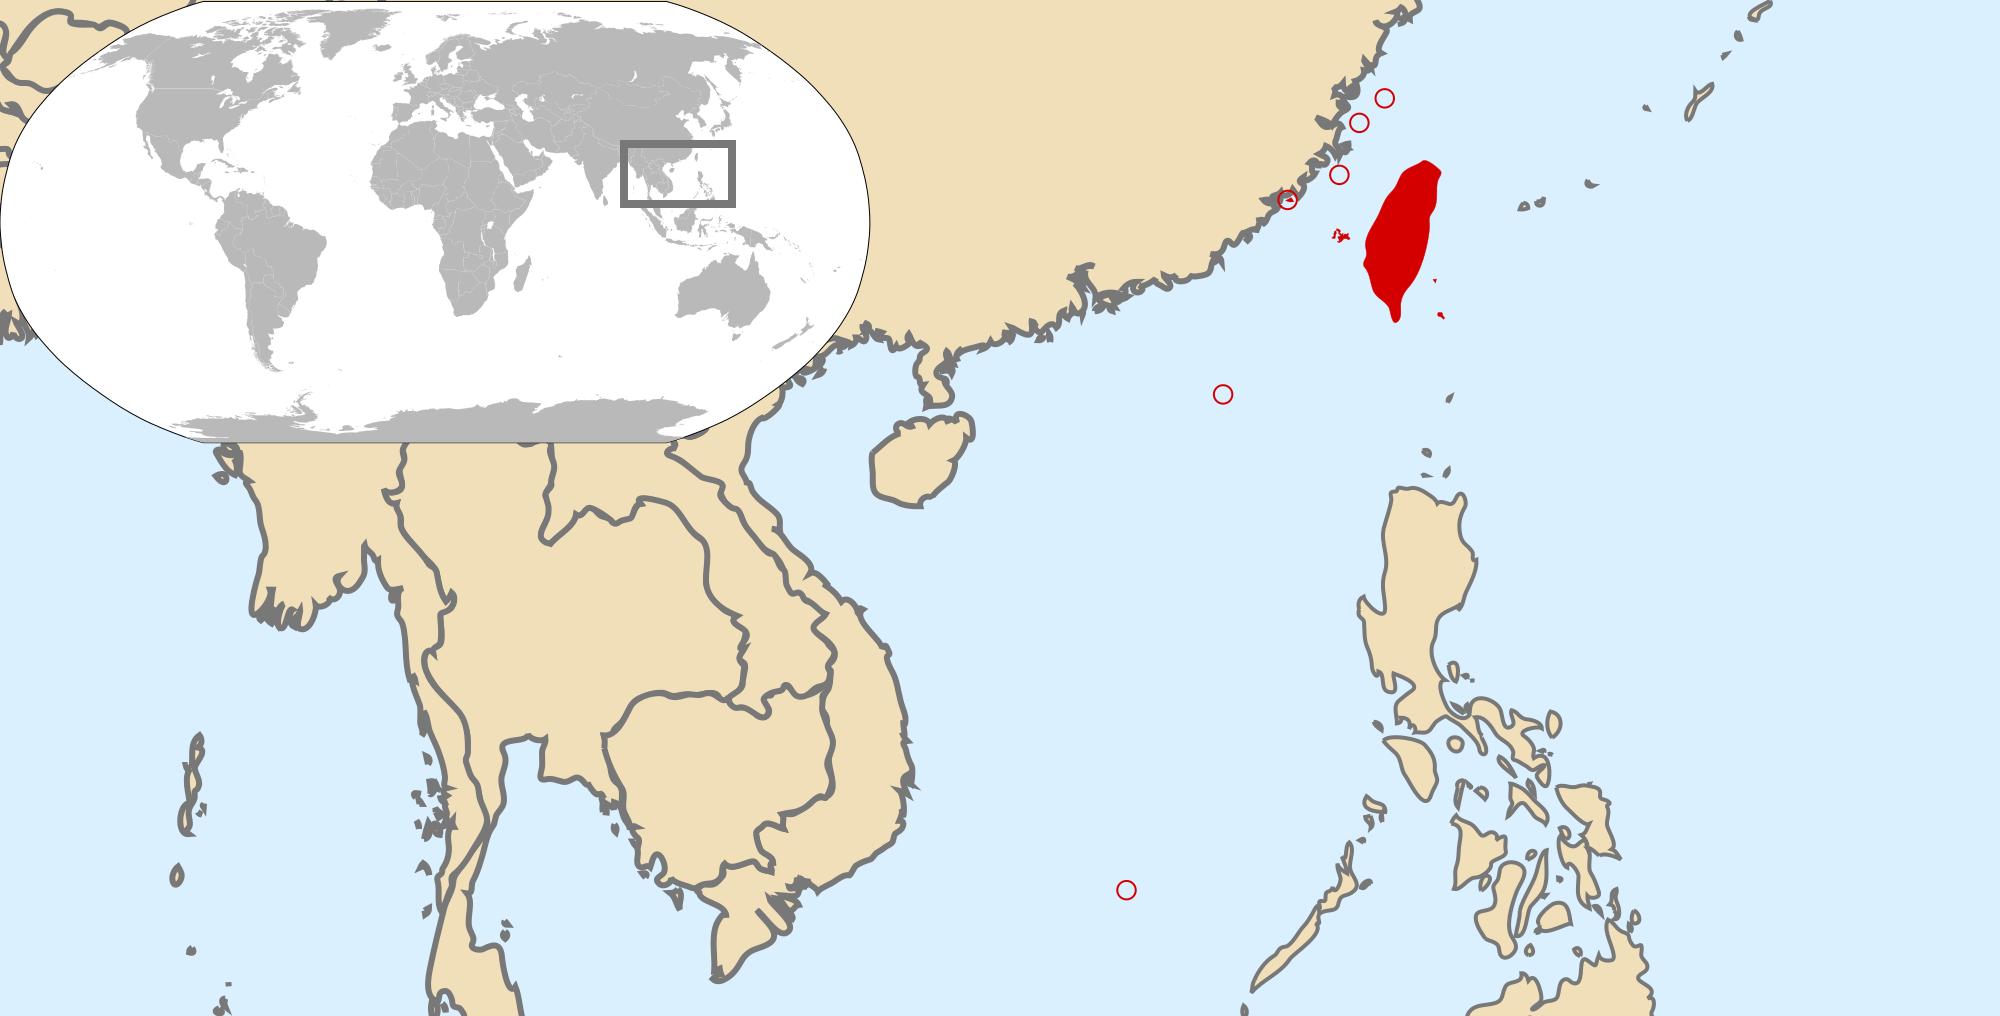 Taiwan Location On World Map World Map Showing Taiwan Eastern Asia